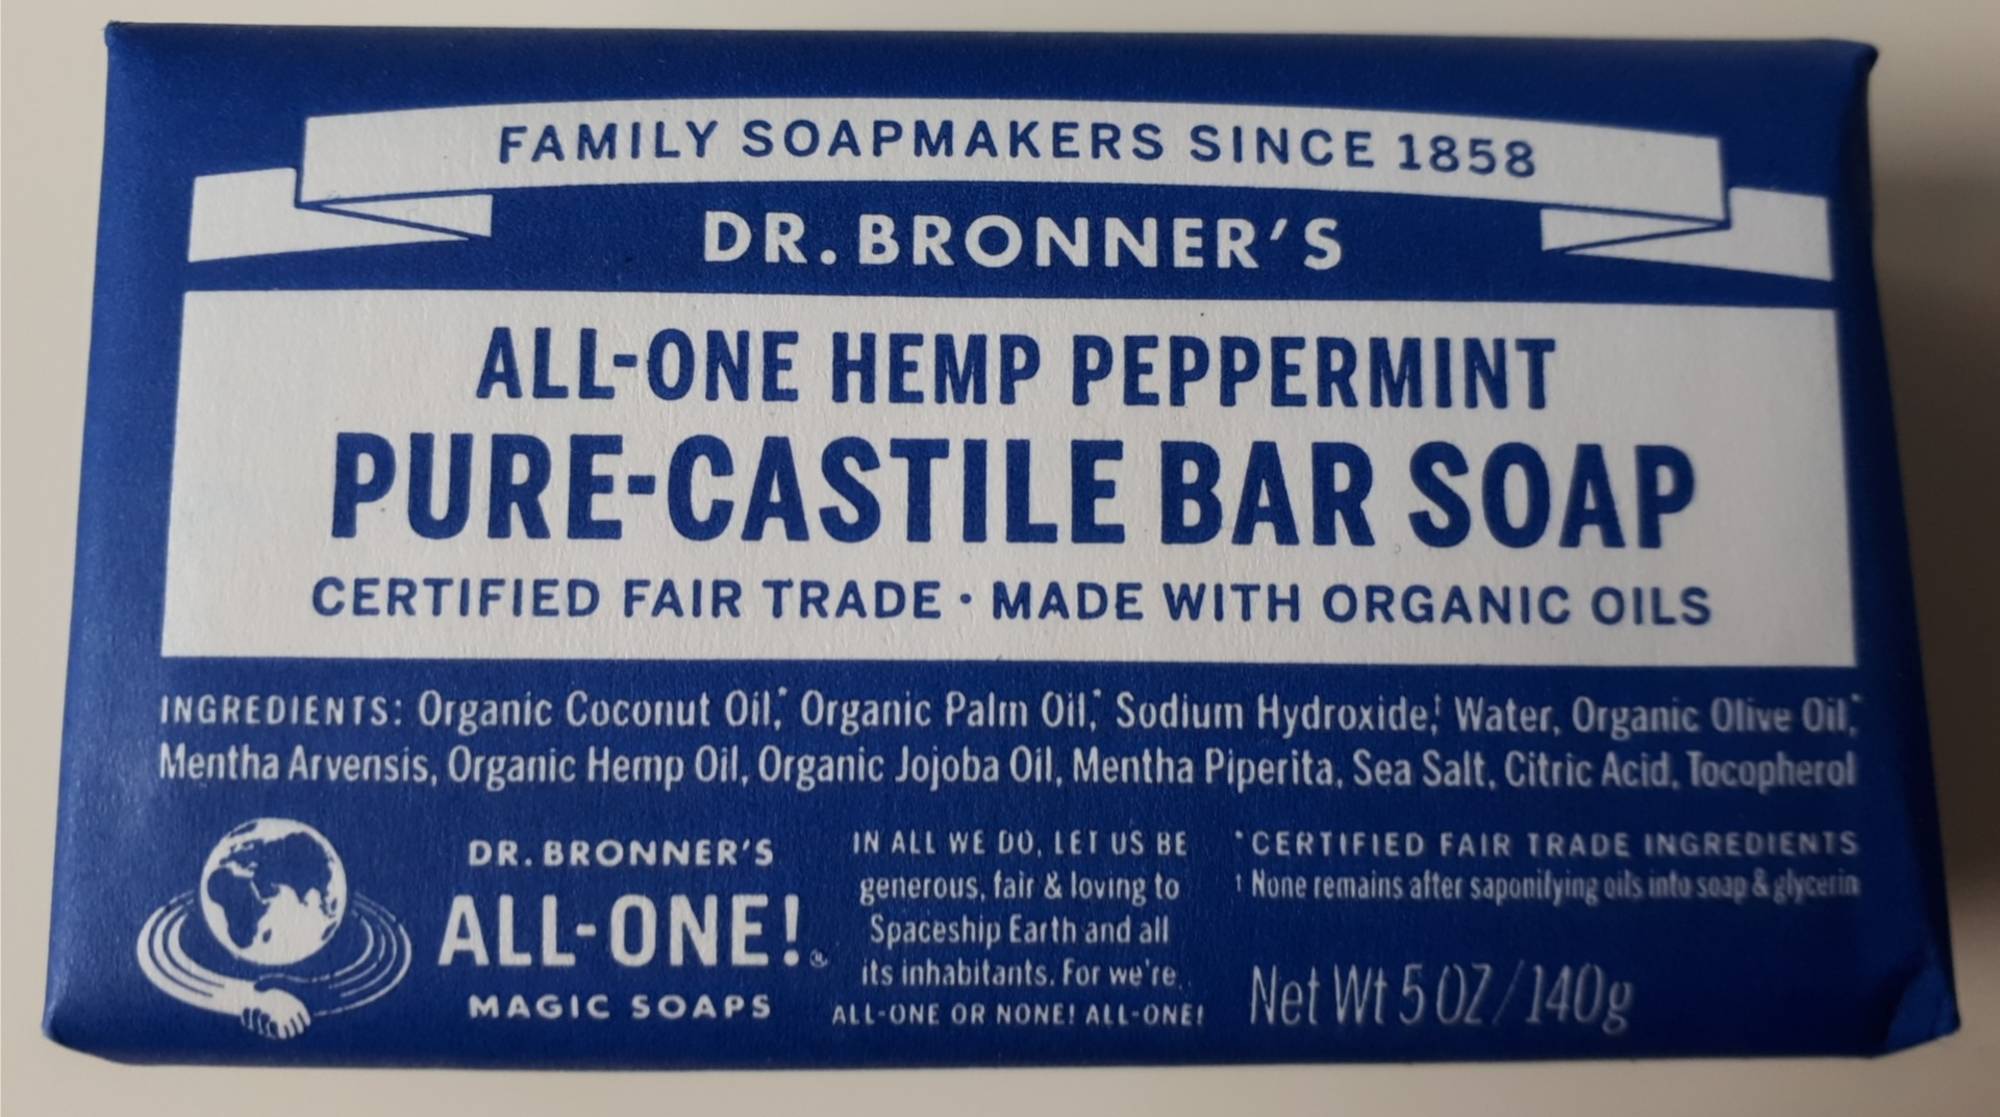 DR. BRONNER'S - Pure-castile bar soap